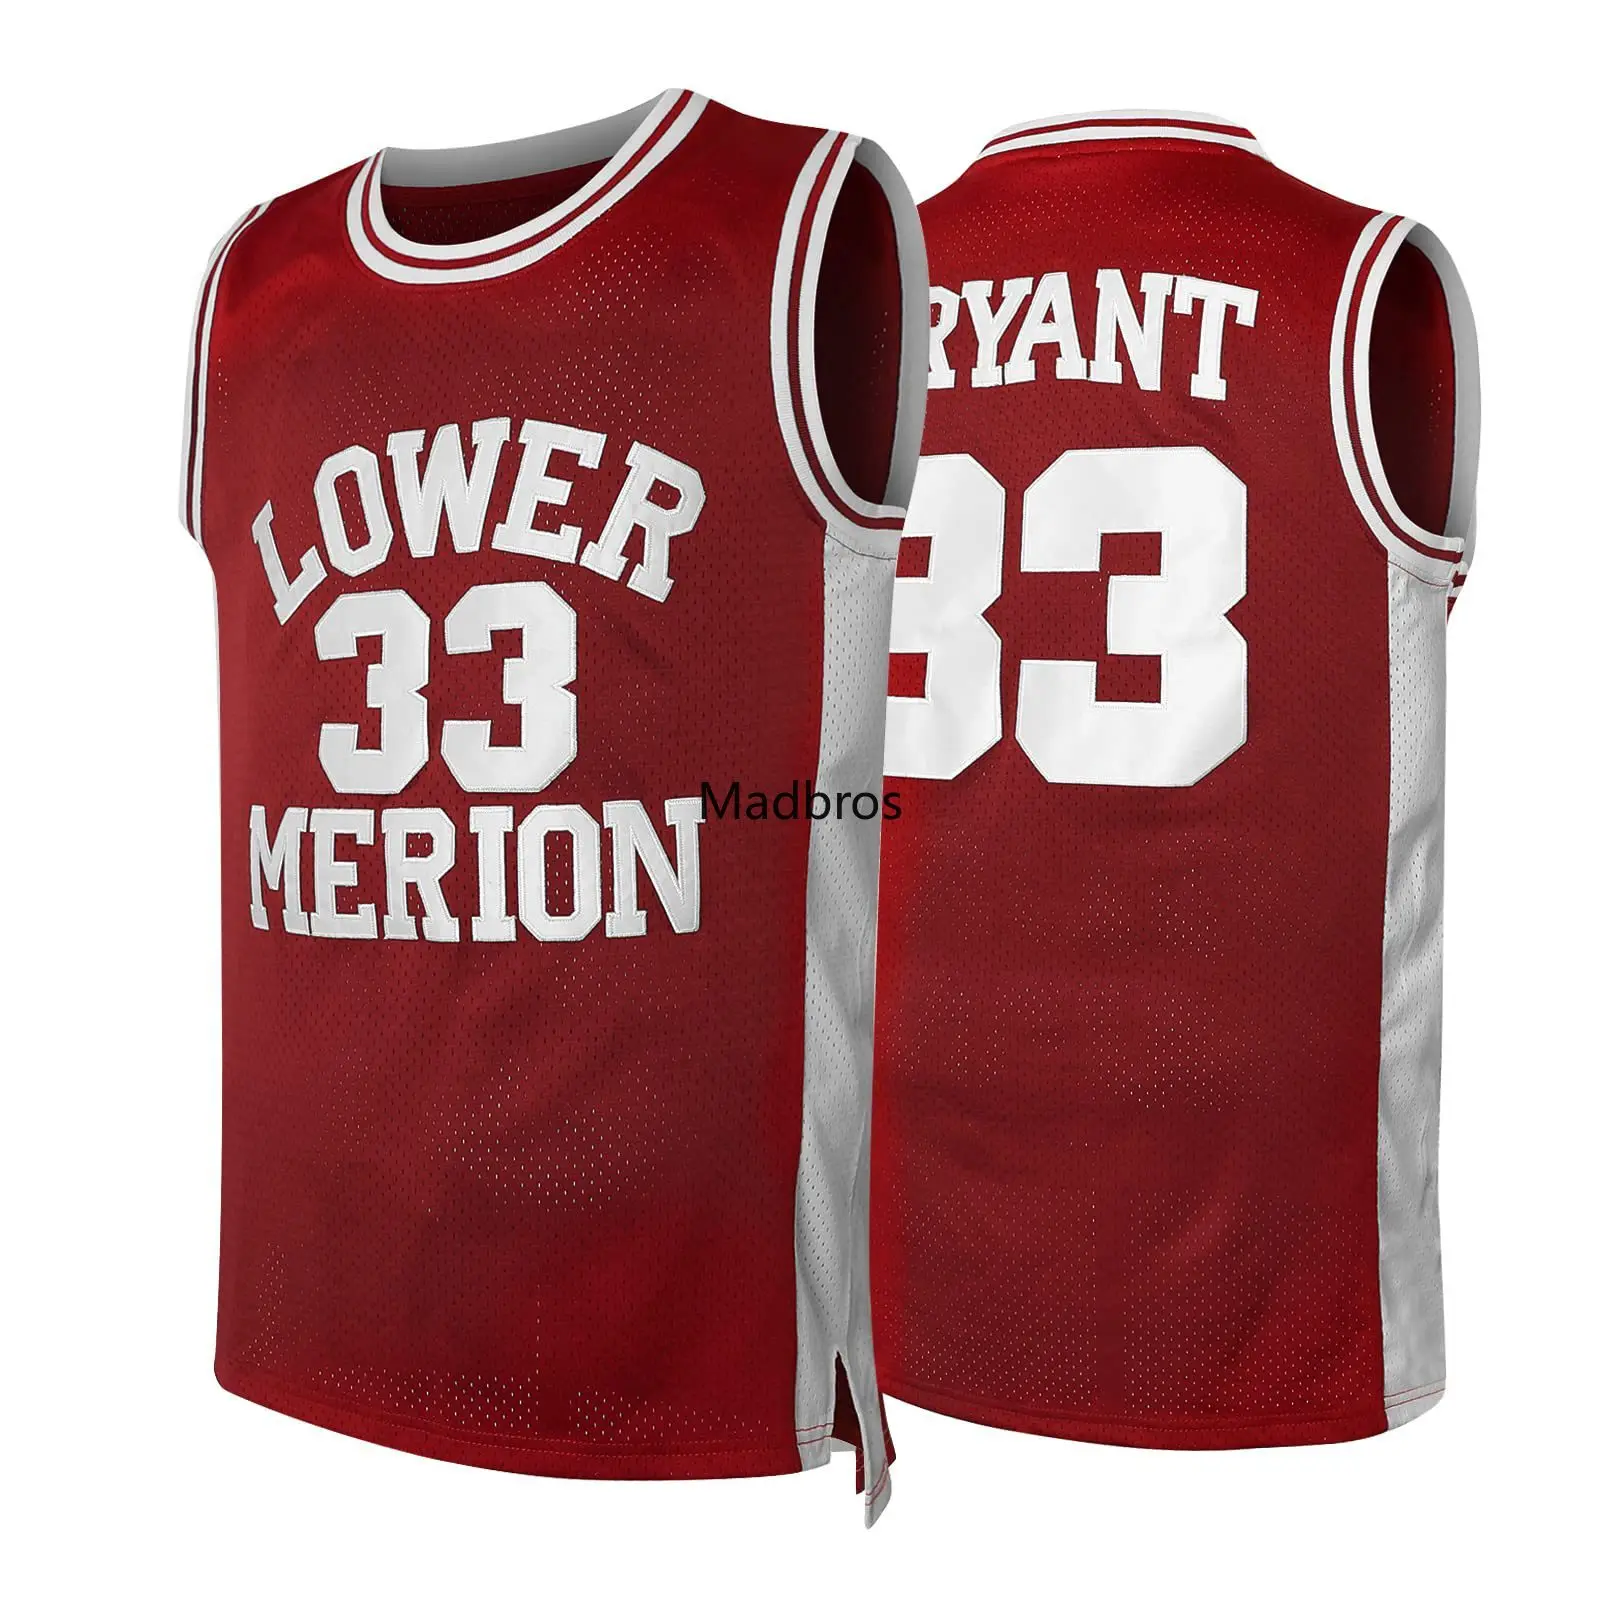 Kobe Bryant Jersey 33 Lower Merion Basketball Jersey Retro High School Mens  Shirt All Stitched Us Size S-XXXL - AliExpress